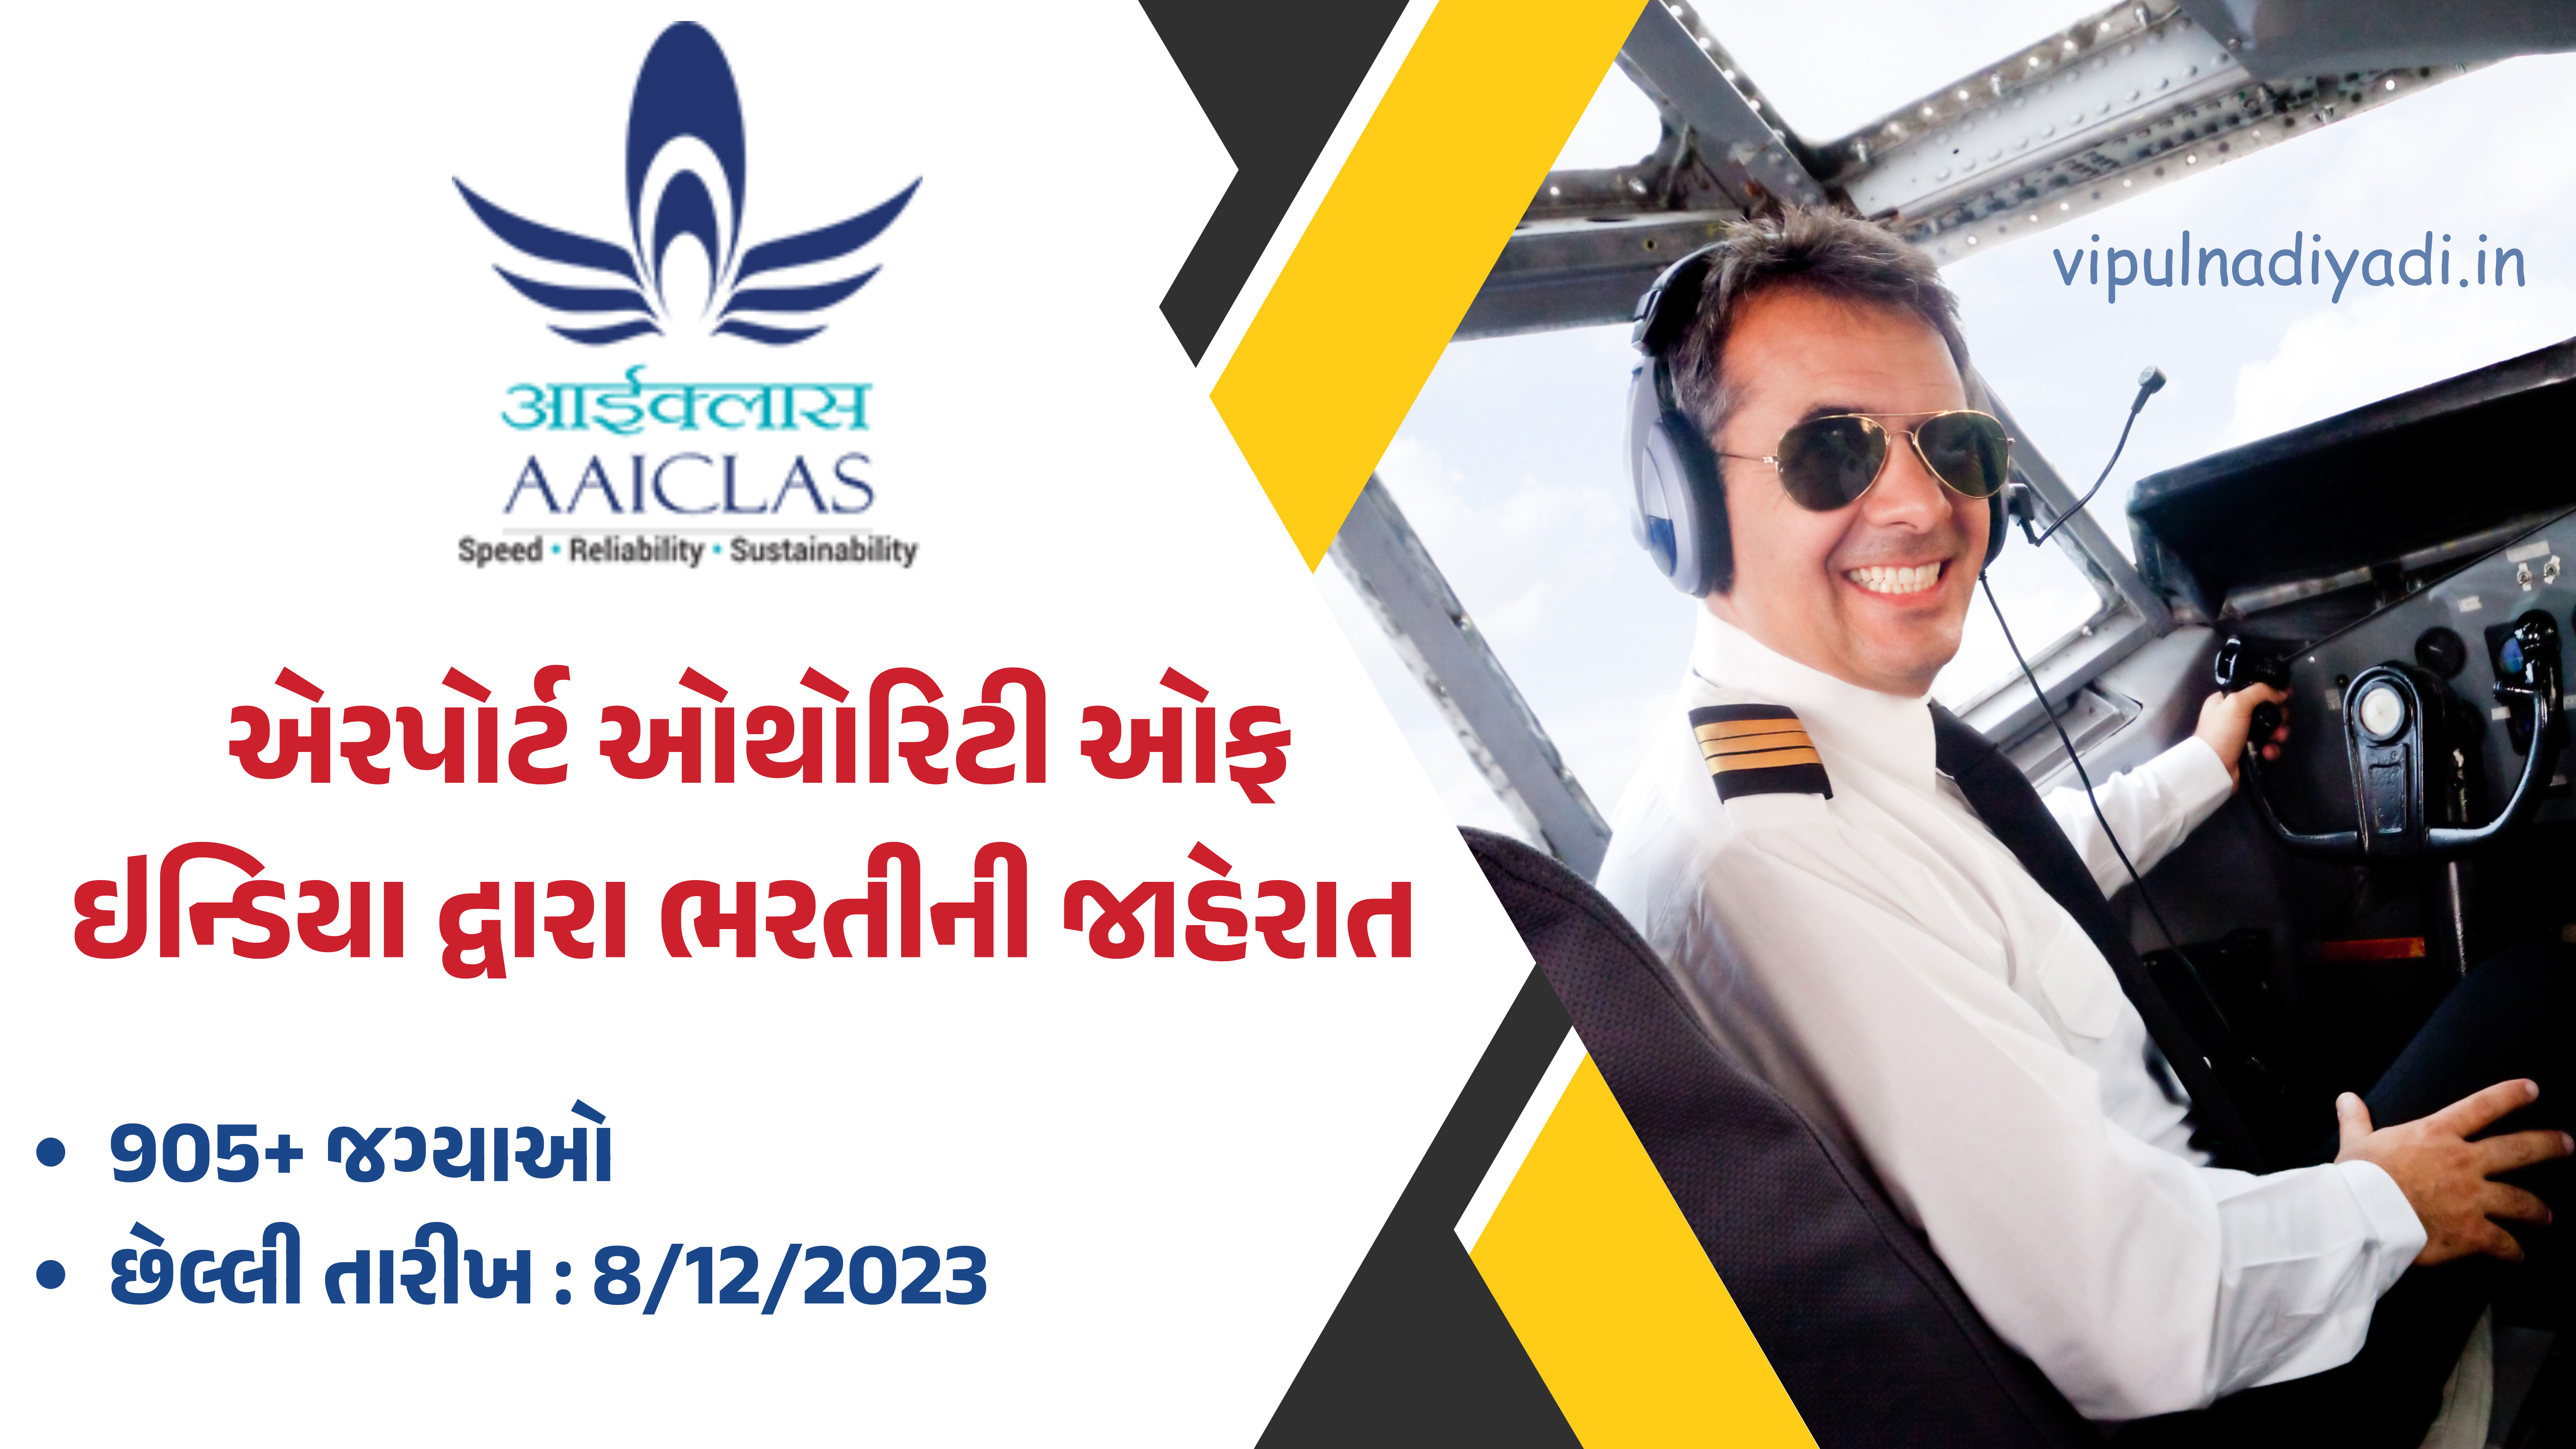 Airport Vibhag Bharti 2023 | AAICLAS Recruitment 2023